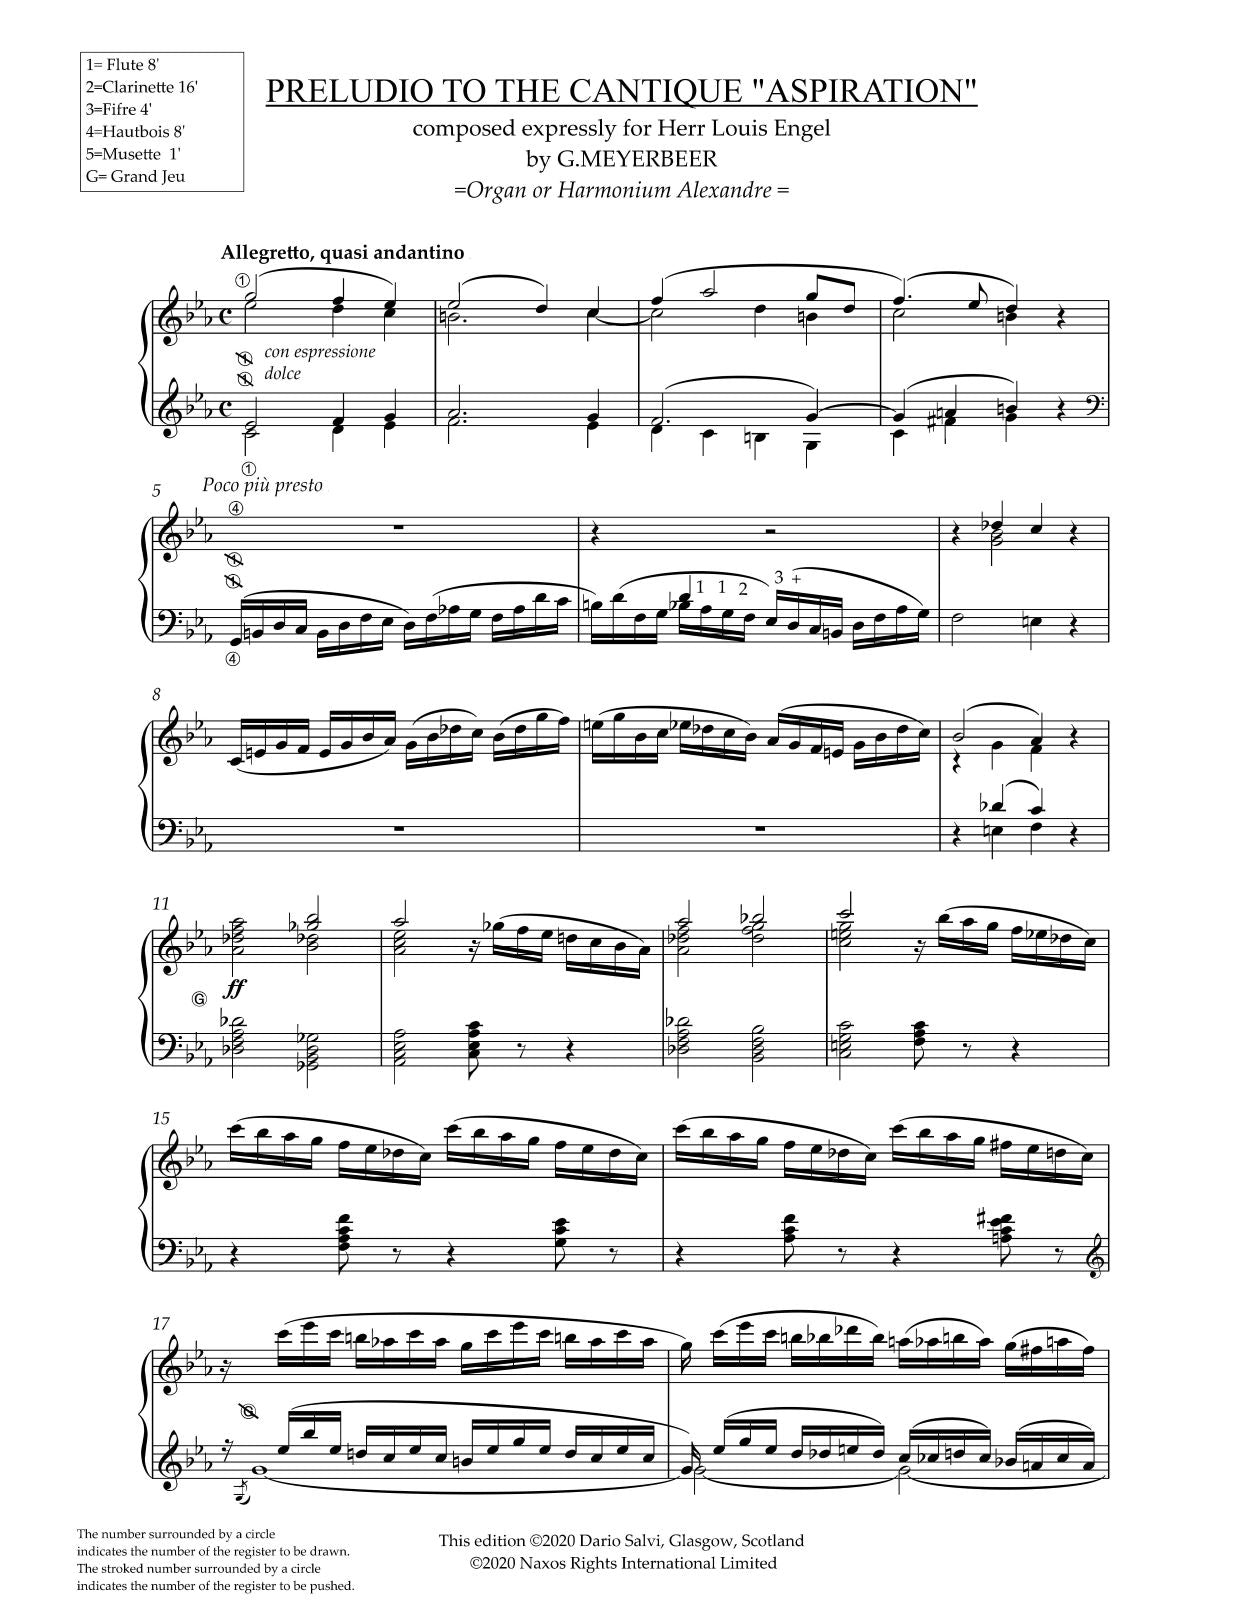 Meyerbeer: Preludio to the Cantique "Aspiration" - Organ or Harmonium Alexandre (NXP063)